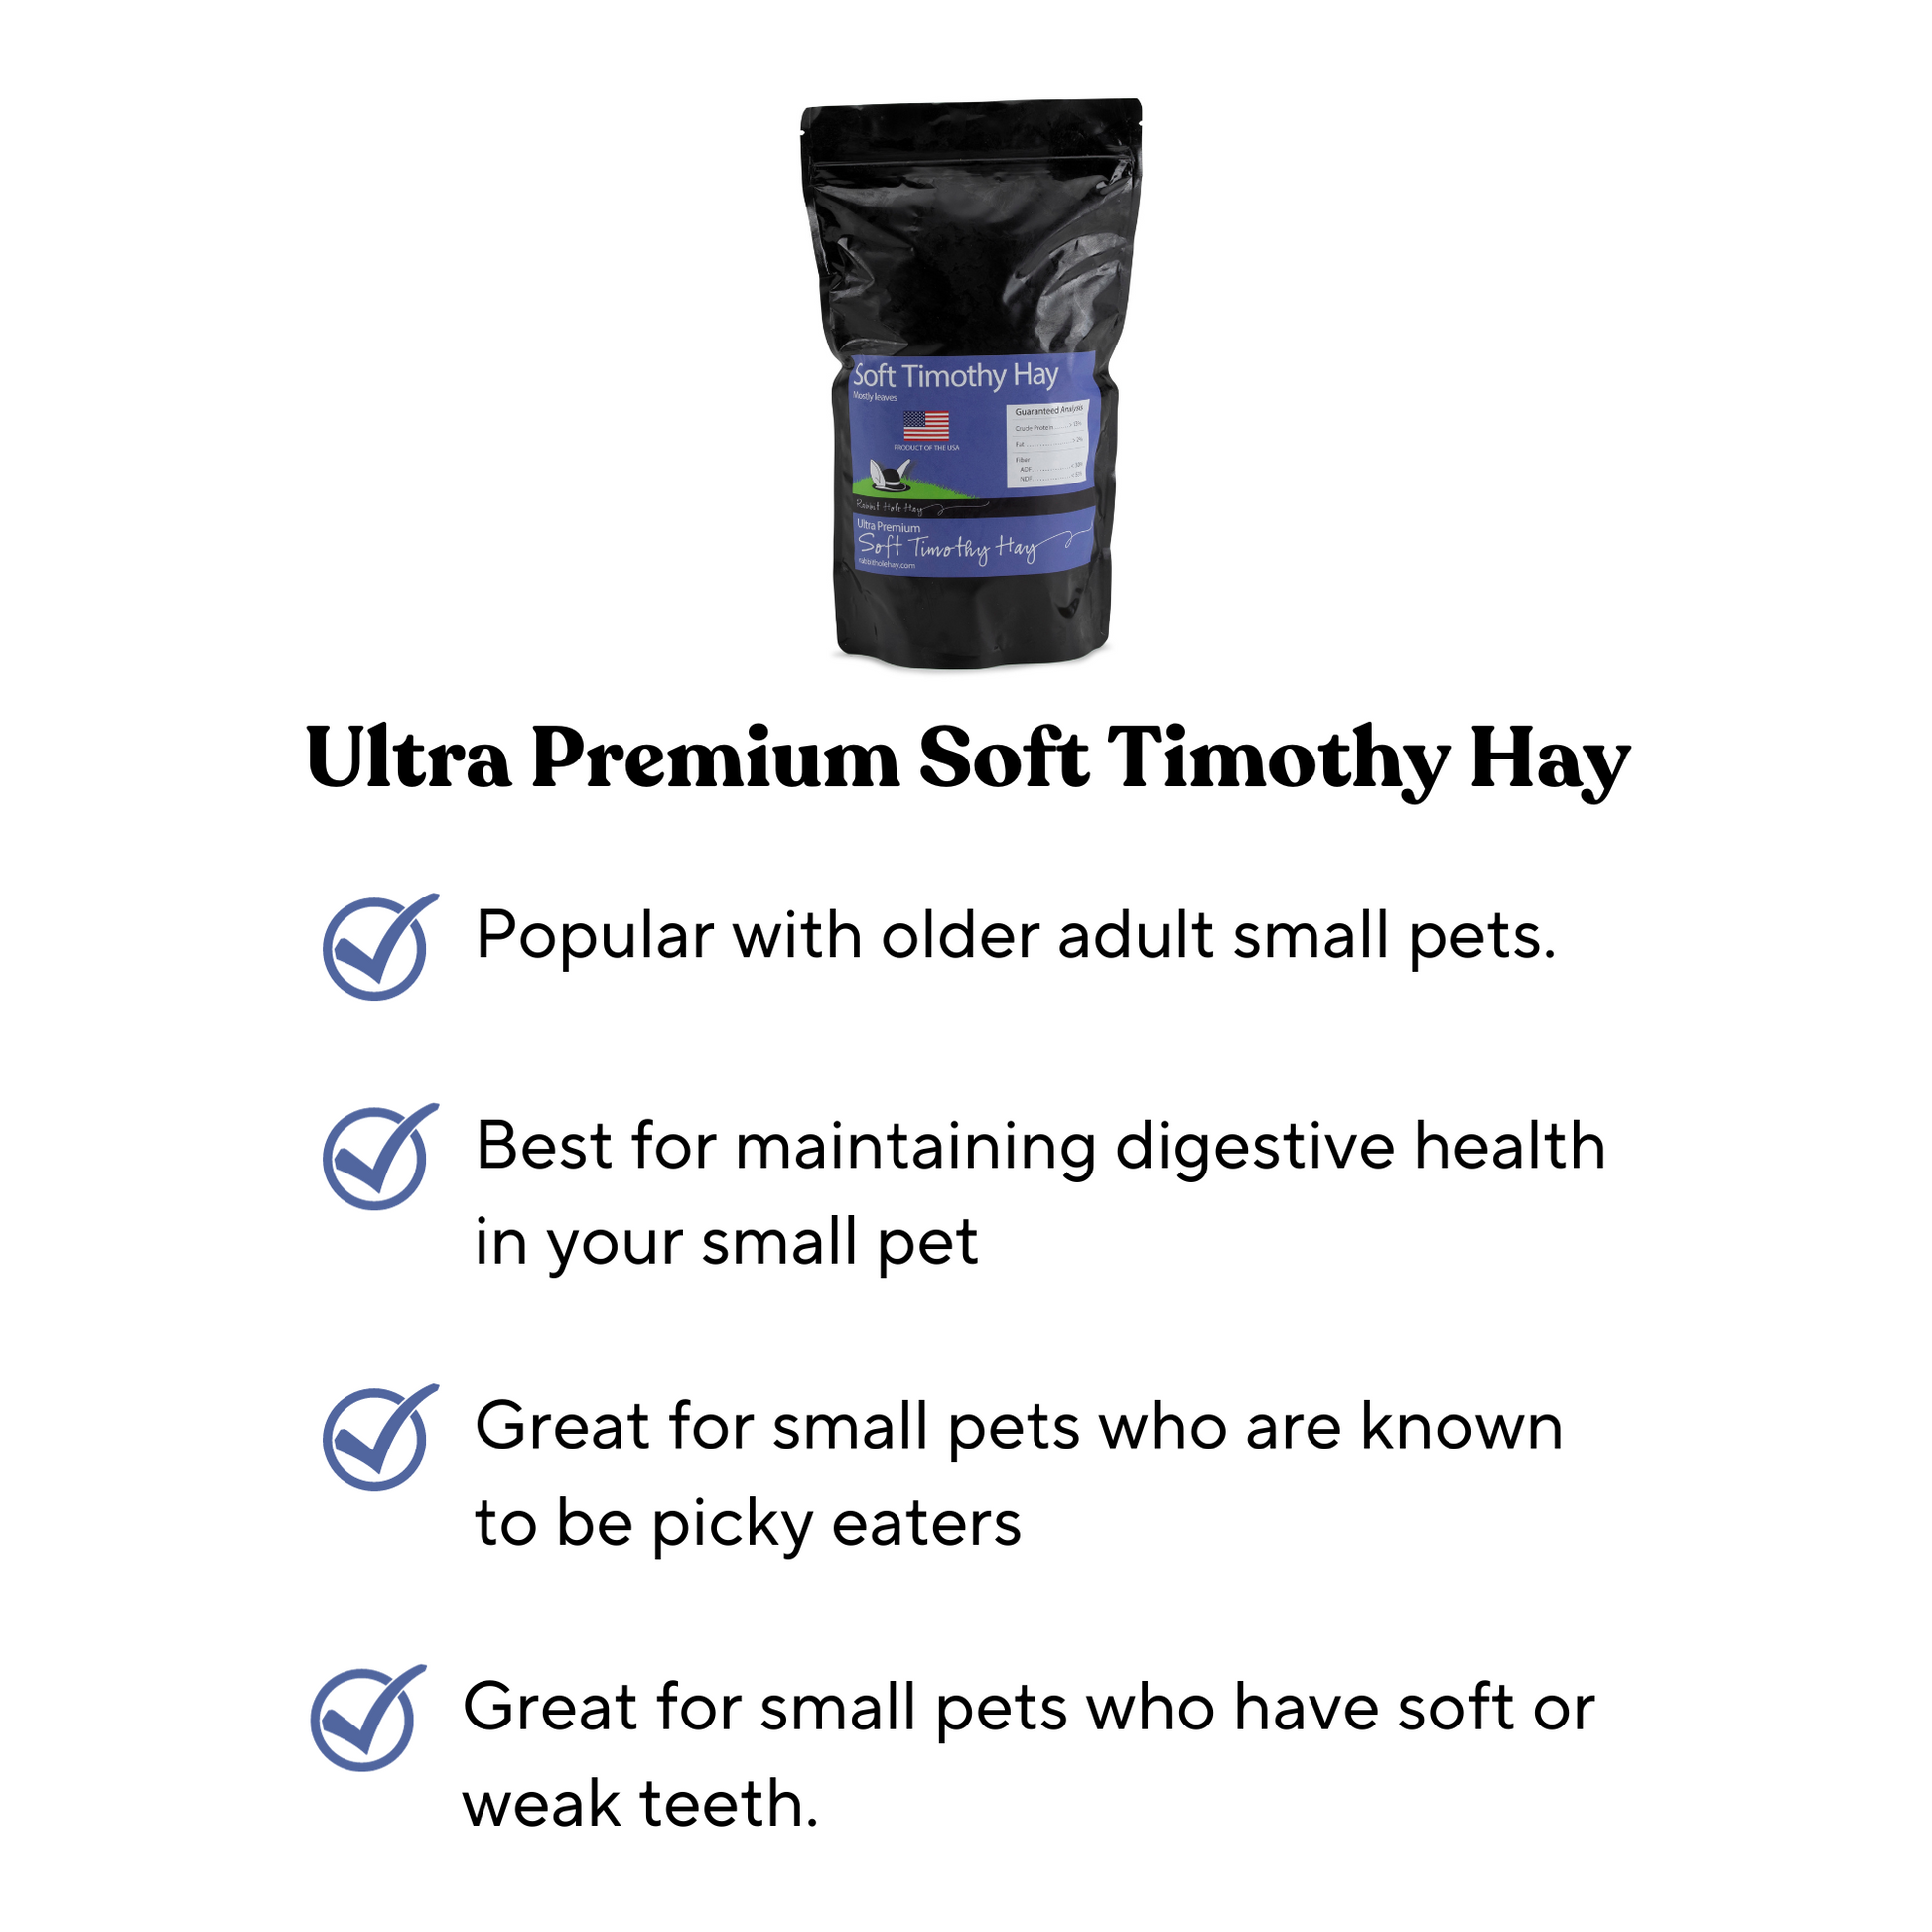 Ultra Premium Soft Timothy Hay Benefits